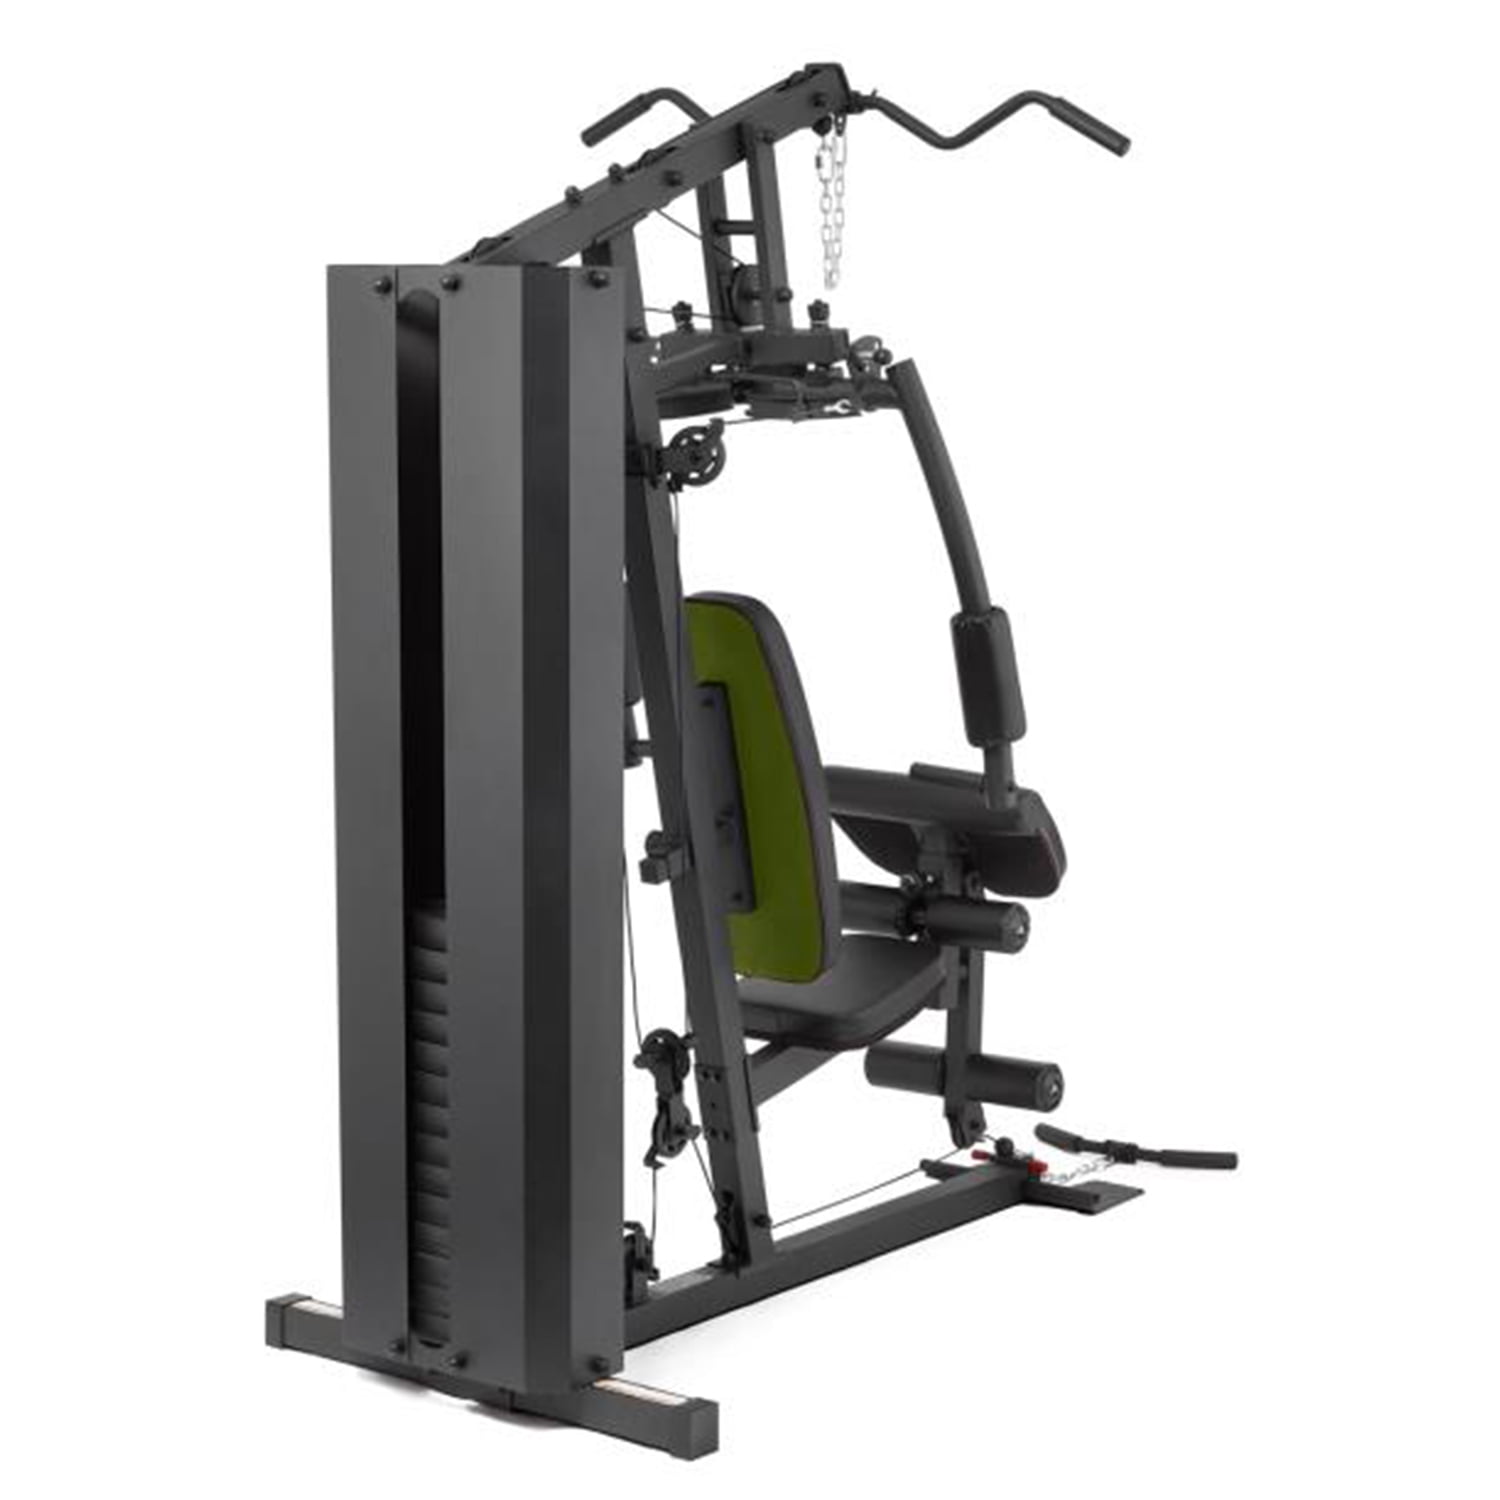 adidas Performance Full Strength Training Gym with Scan to Train - Walmart.com